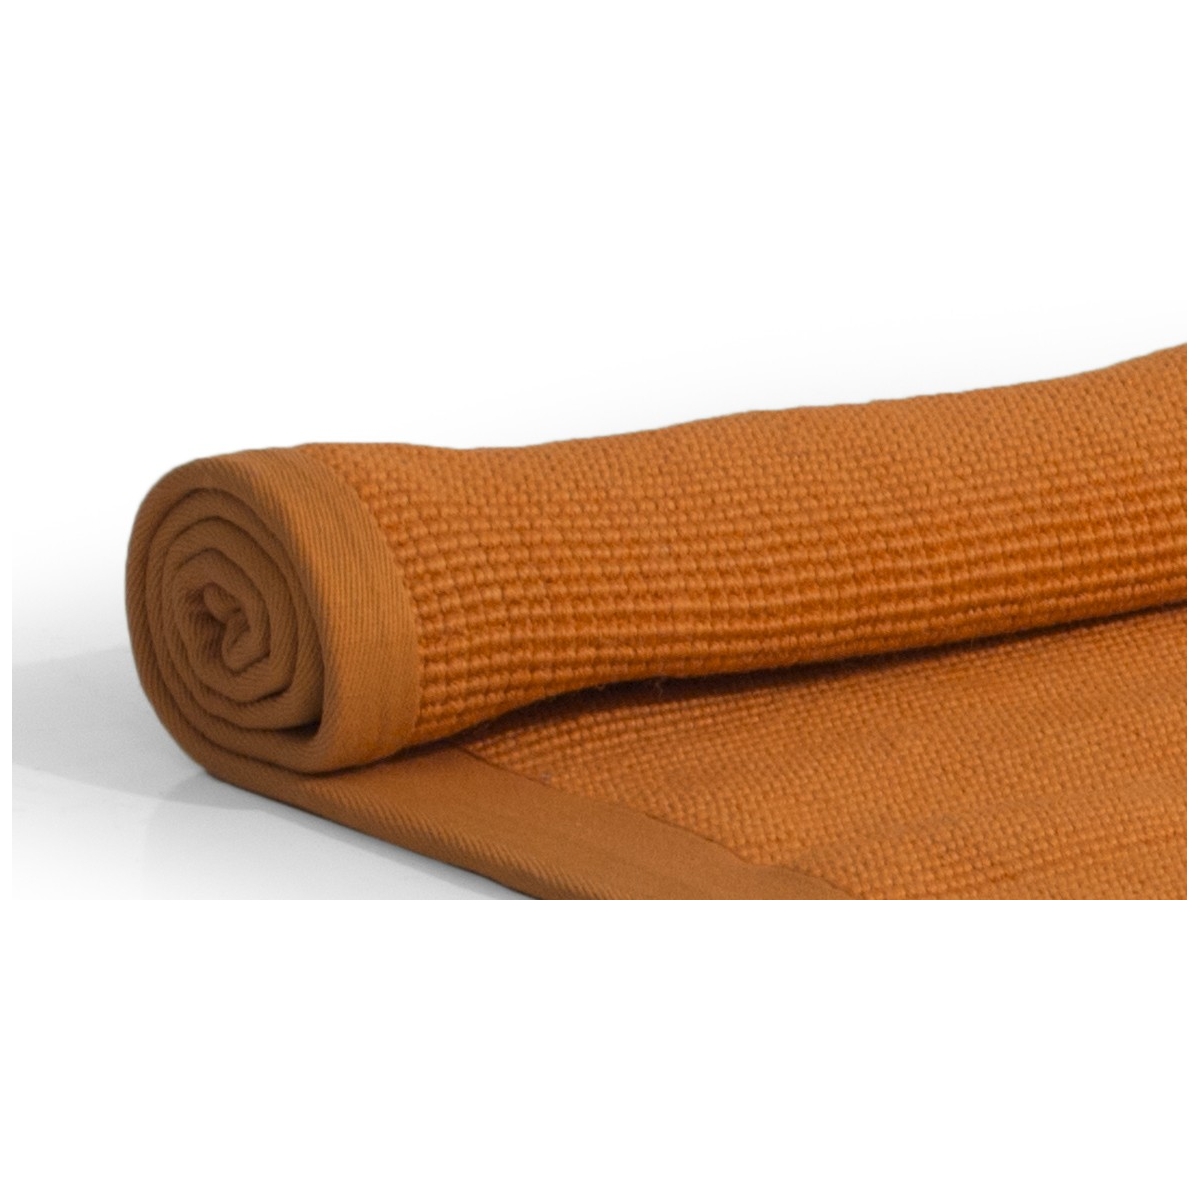 Tappeto Stripes Rust in juta arancione, 140x200 cm